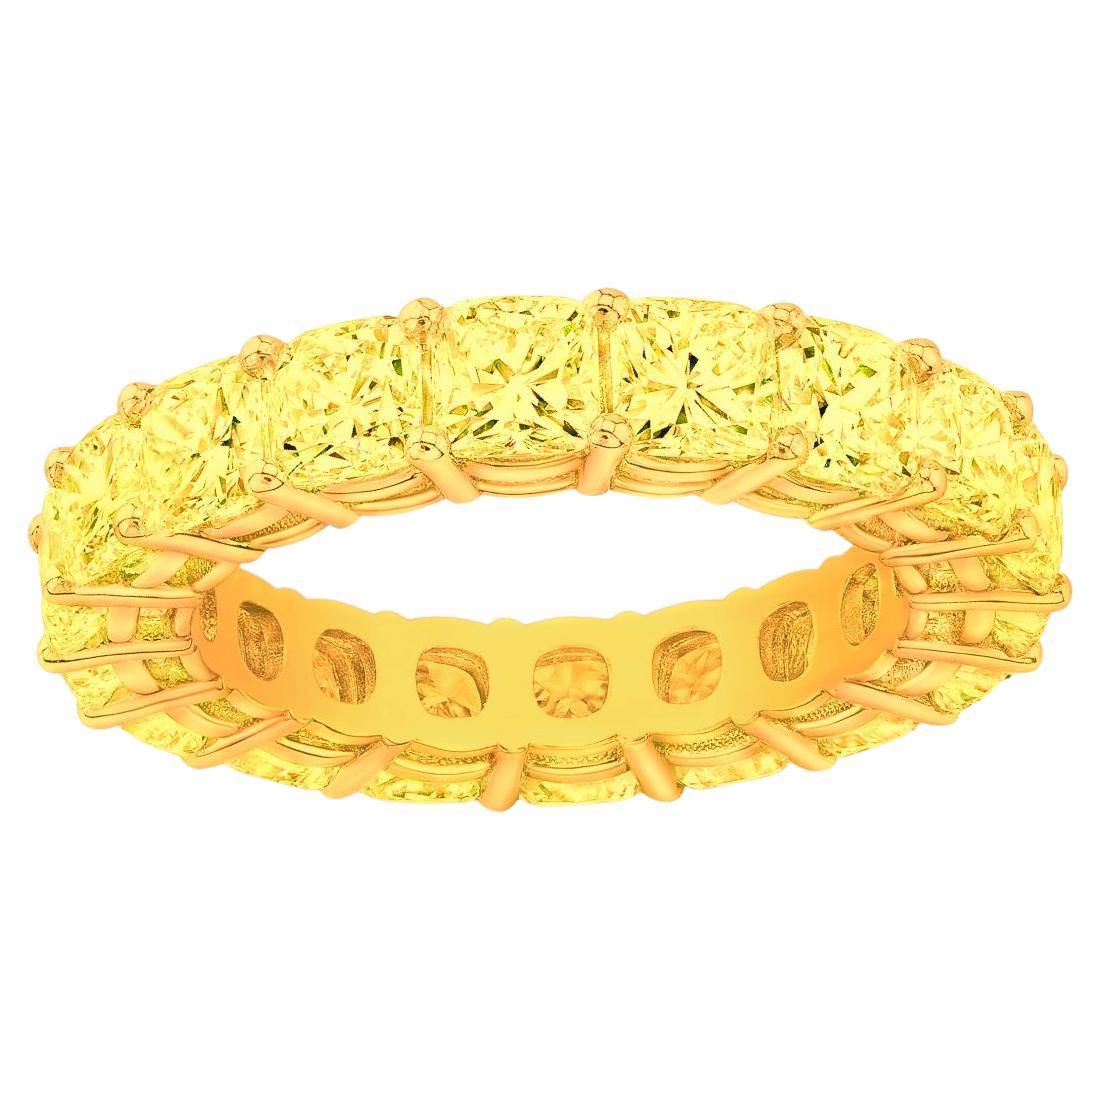 6 Carat Fancy Yellow Eternity Band Ring Set in 18 Carat Yellow Gold